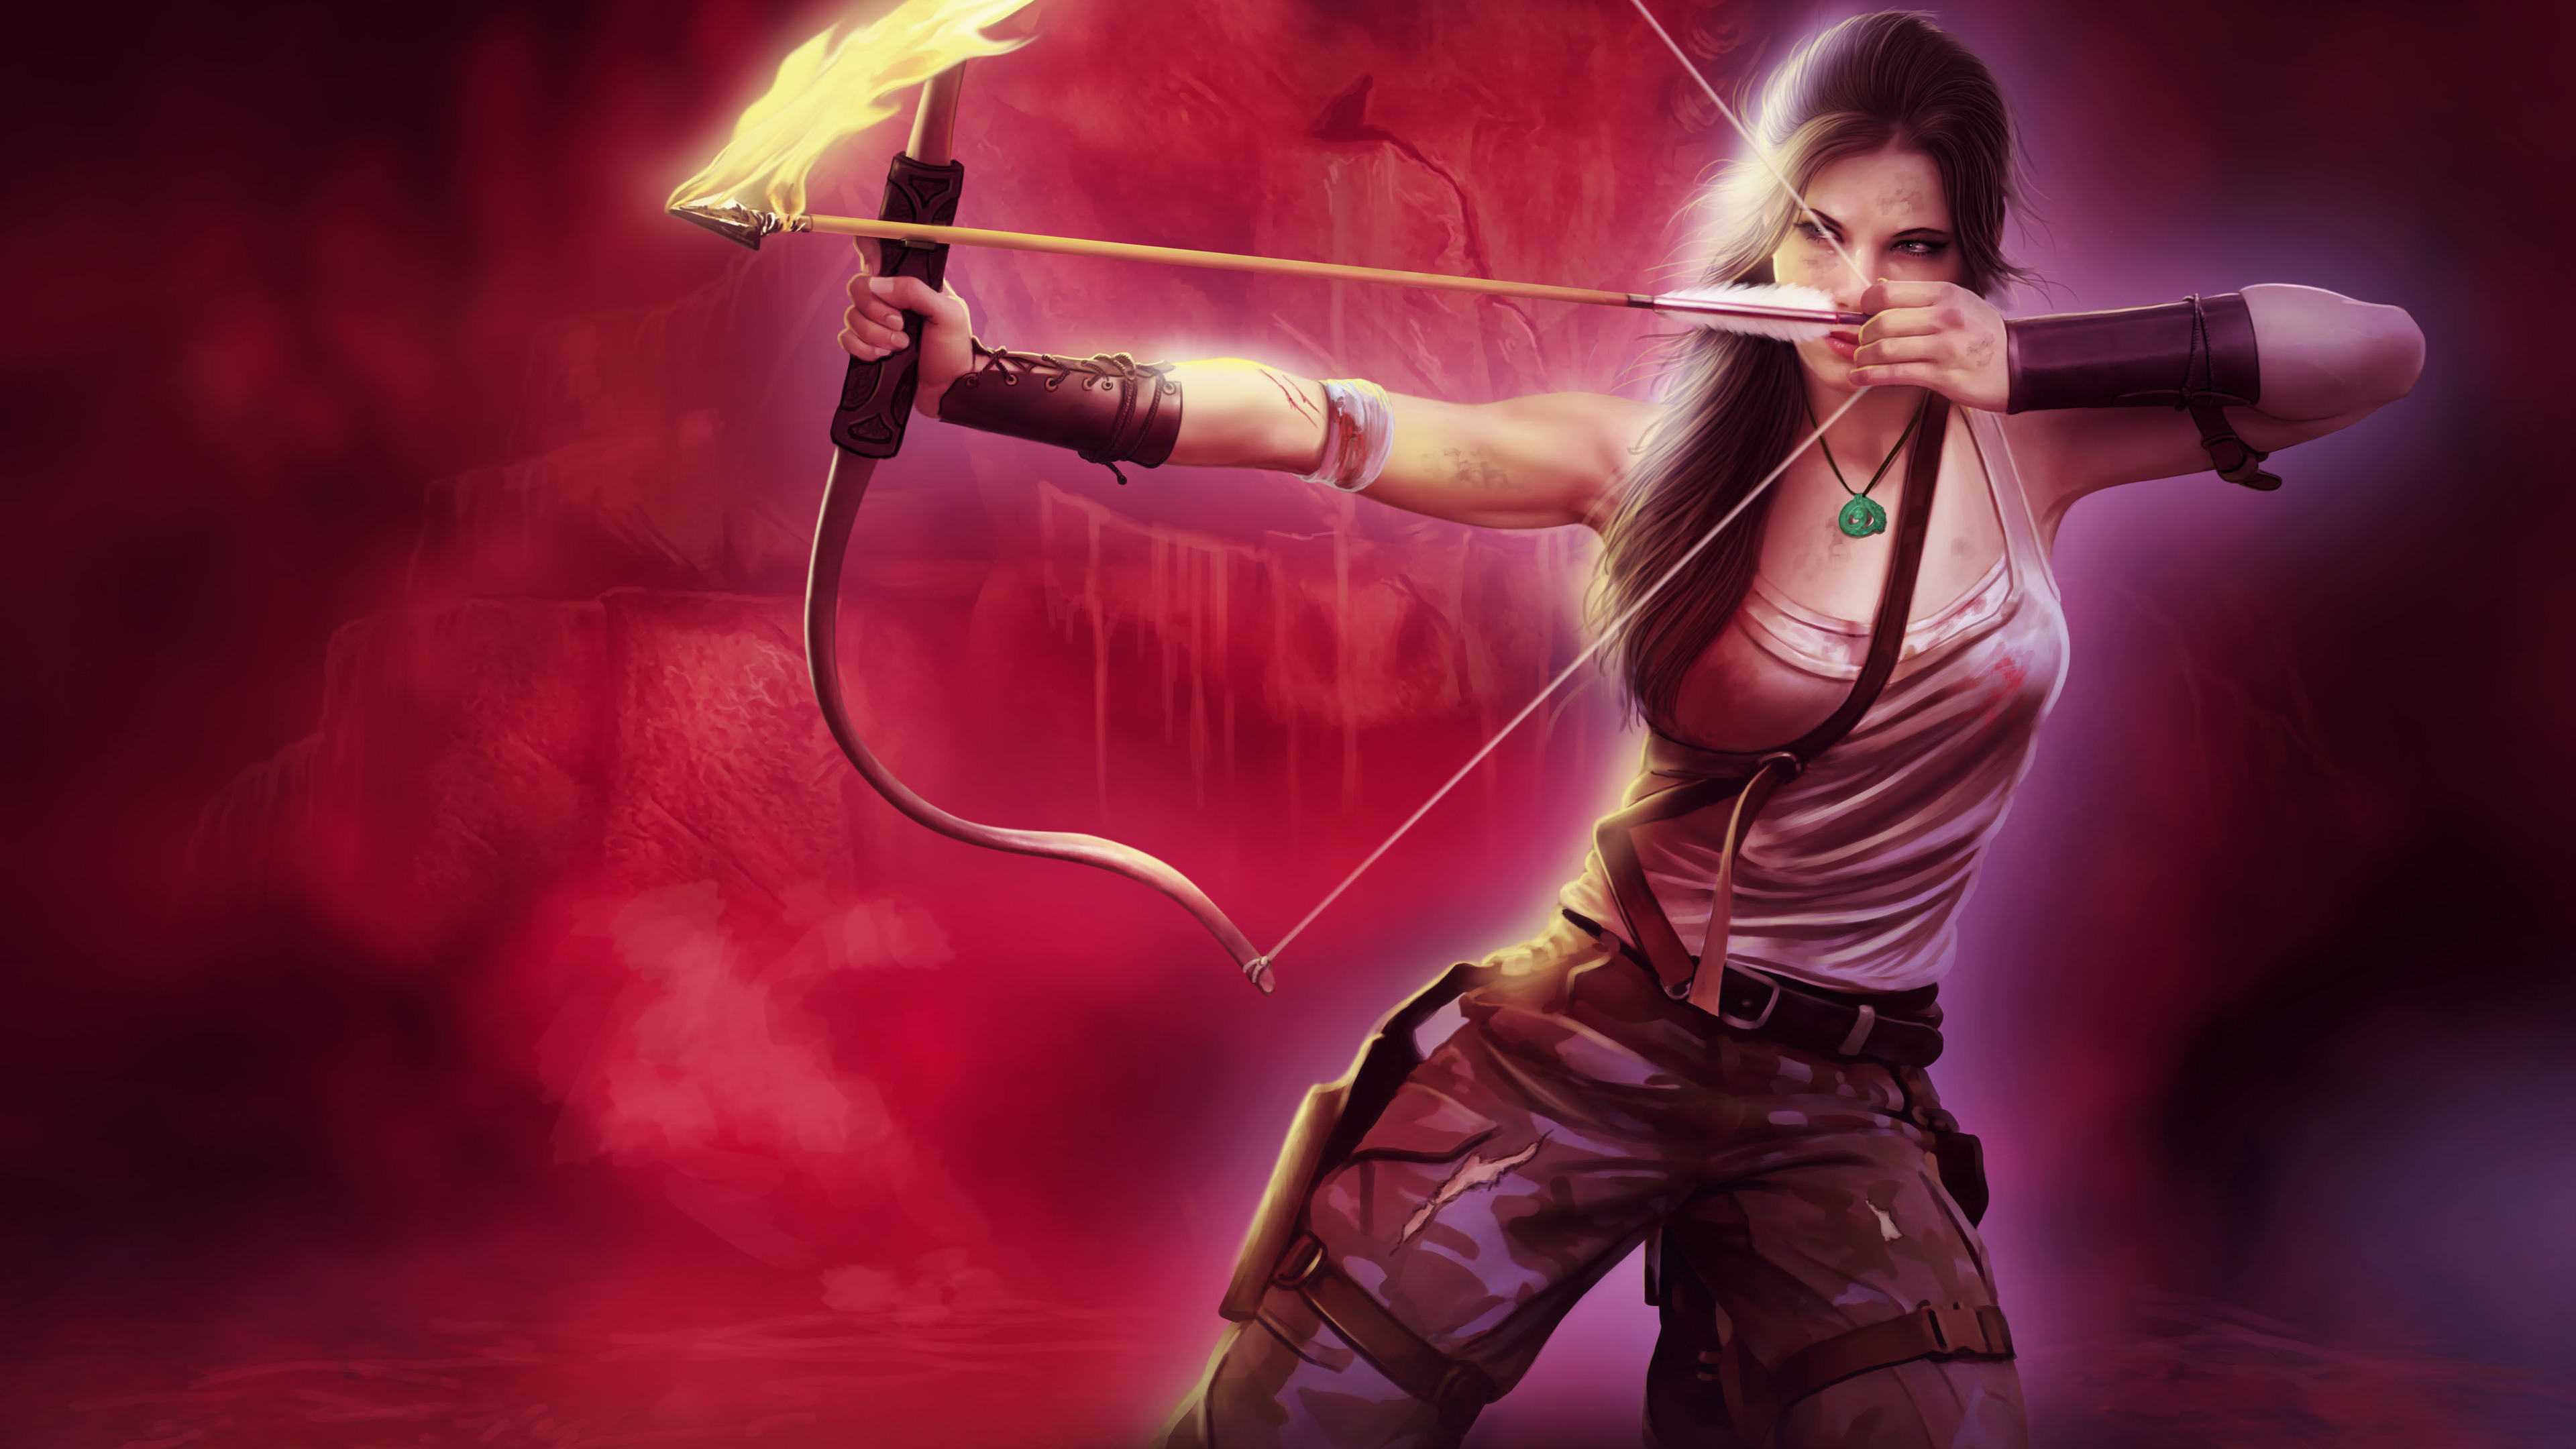 Wallpaper 4k Tomb Raider Lara Croft Girl With Bow And Arrow Wallpaper